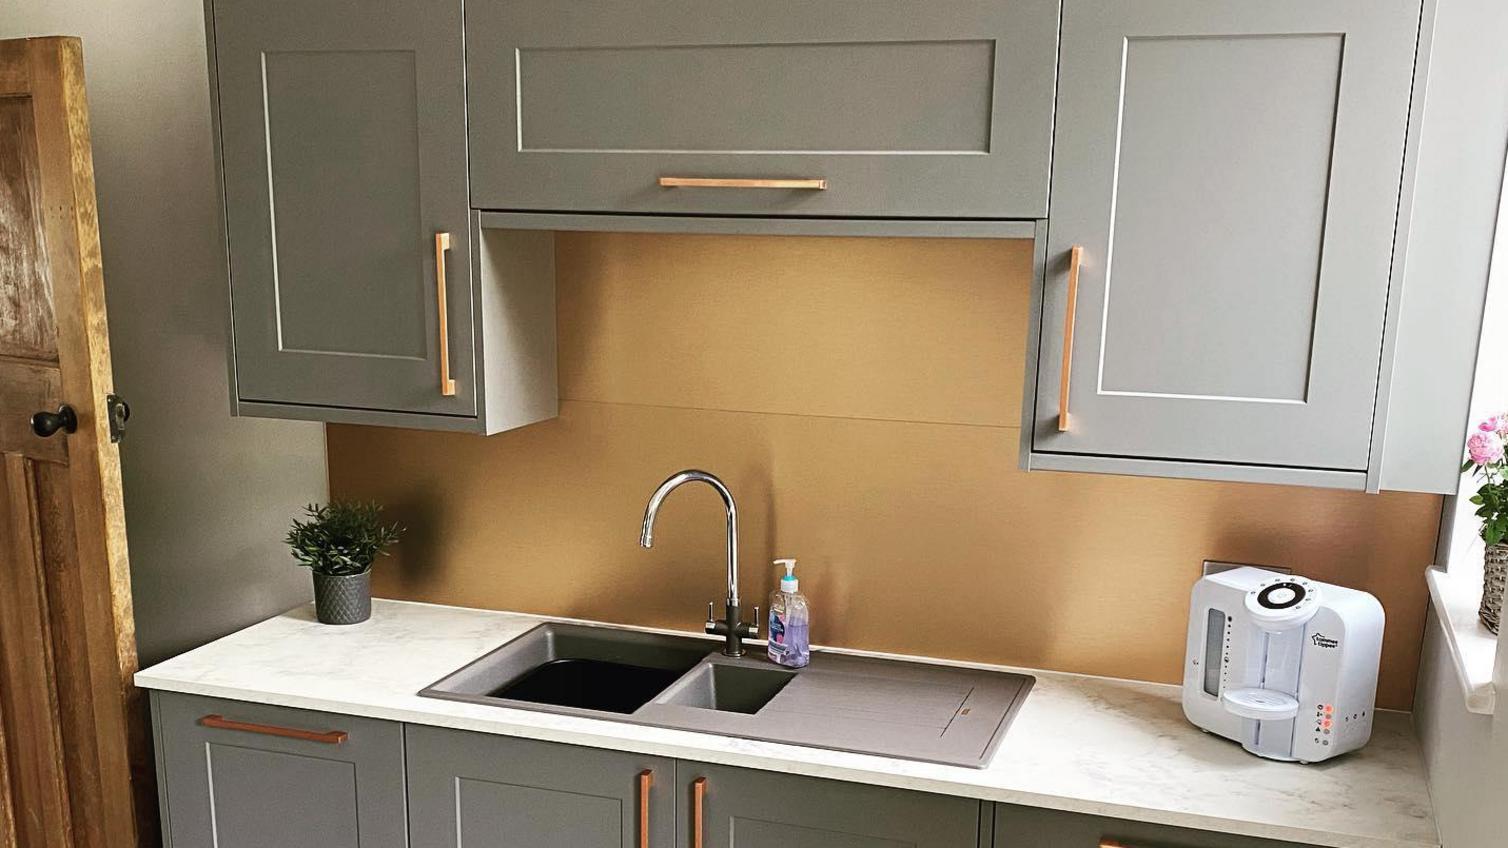 Grey shaker kitchen with brass bar handles, a white quartz worktop, gold shiny backsplash and a silver tap.